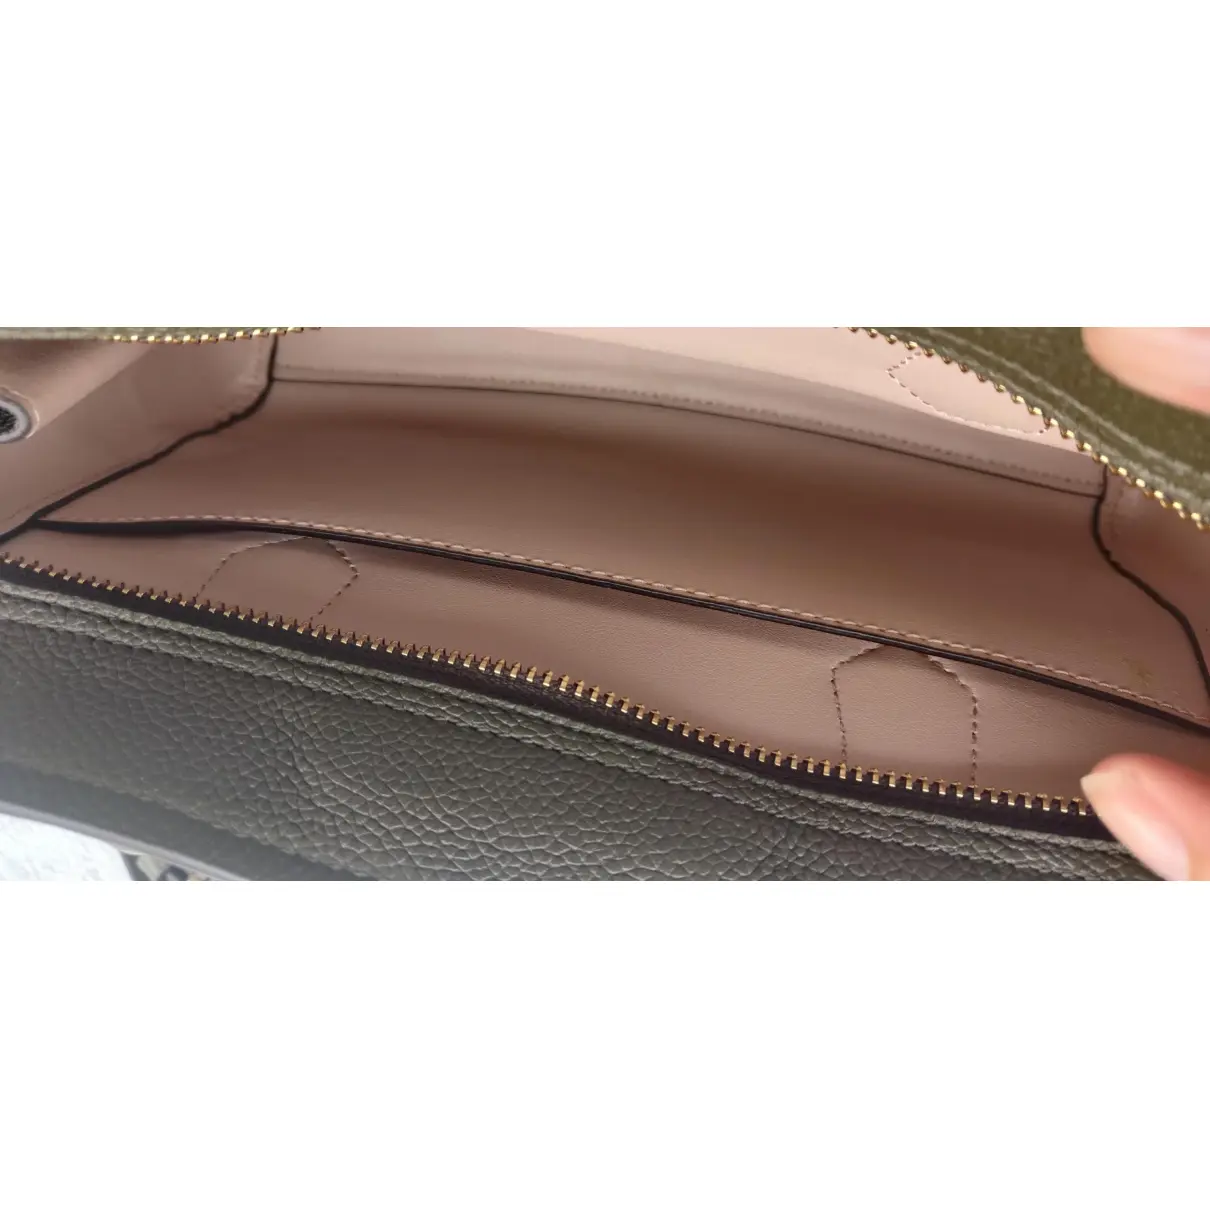 Bridgette leather handbag Michael Kors